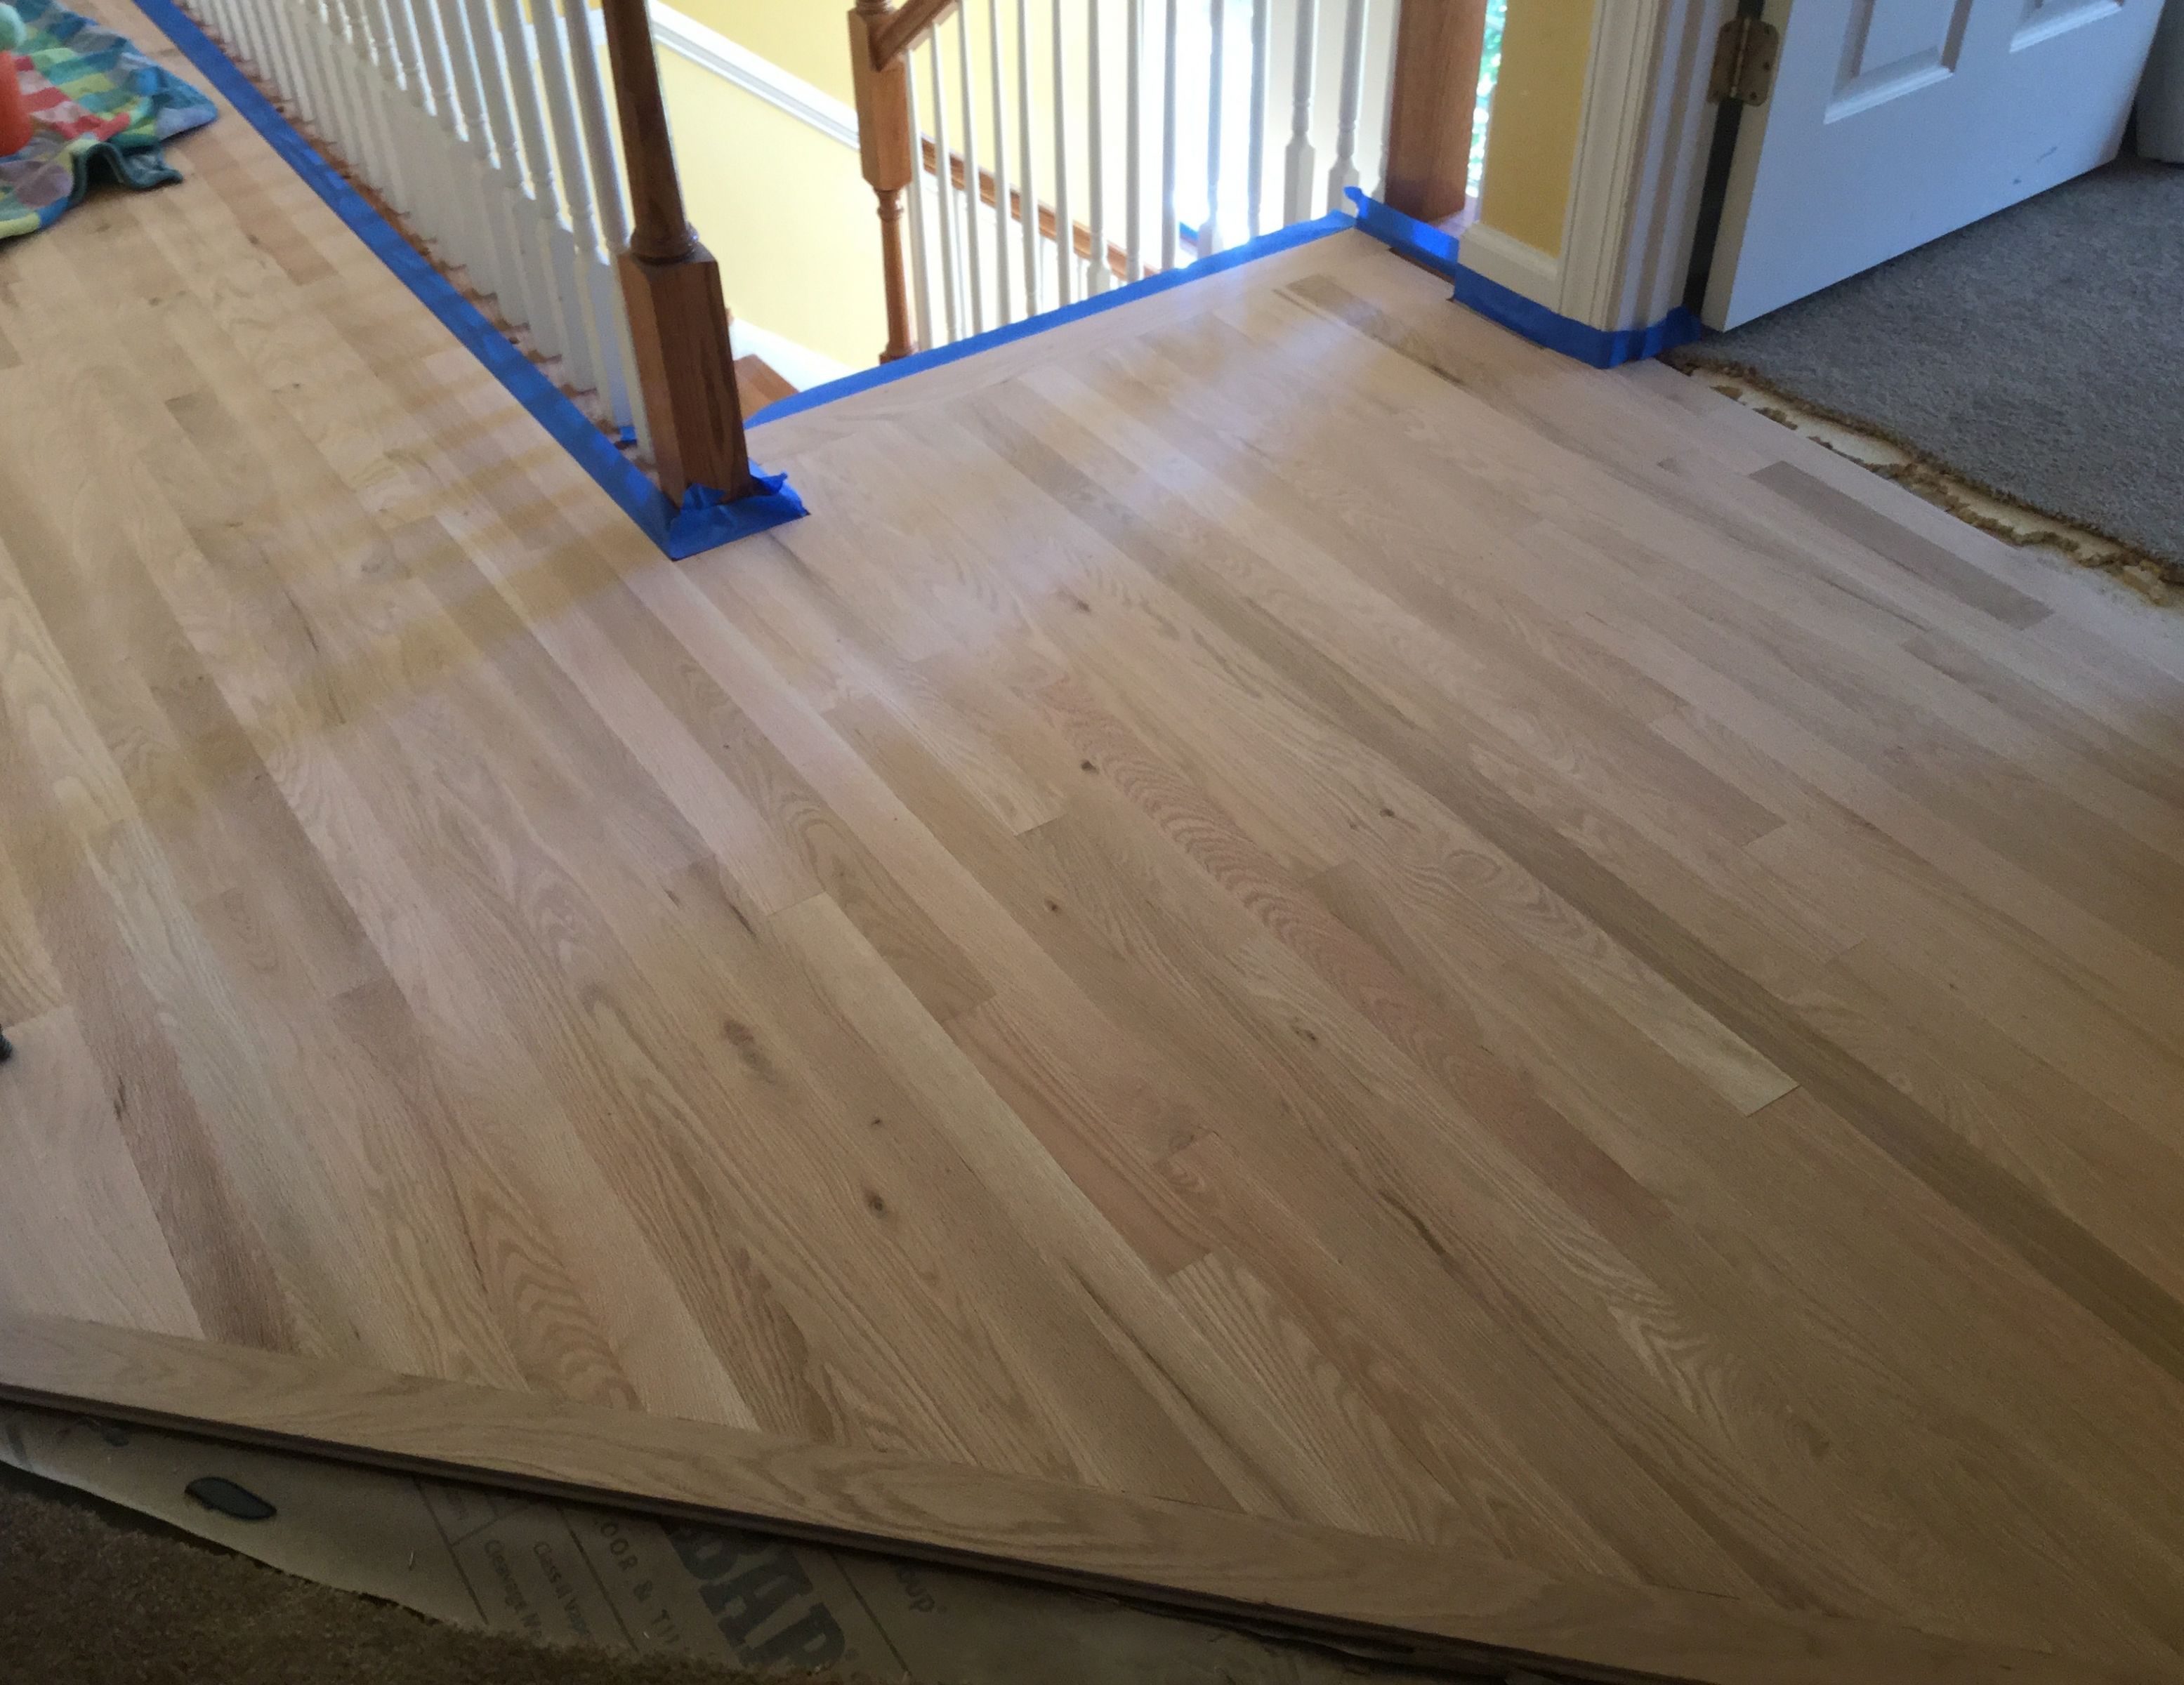 Wood Floor Installation Egg Harbor Township Nj 08234